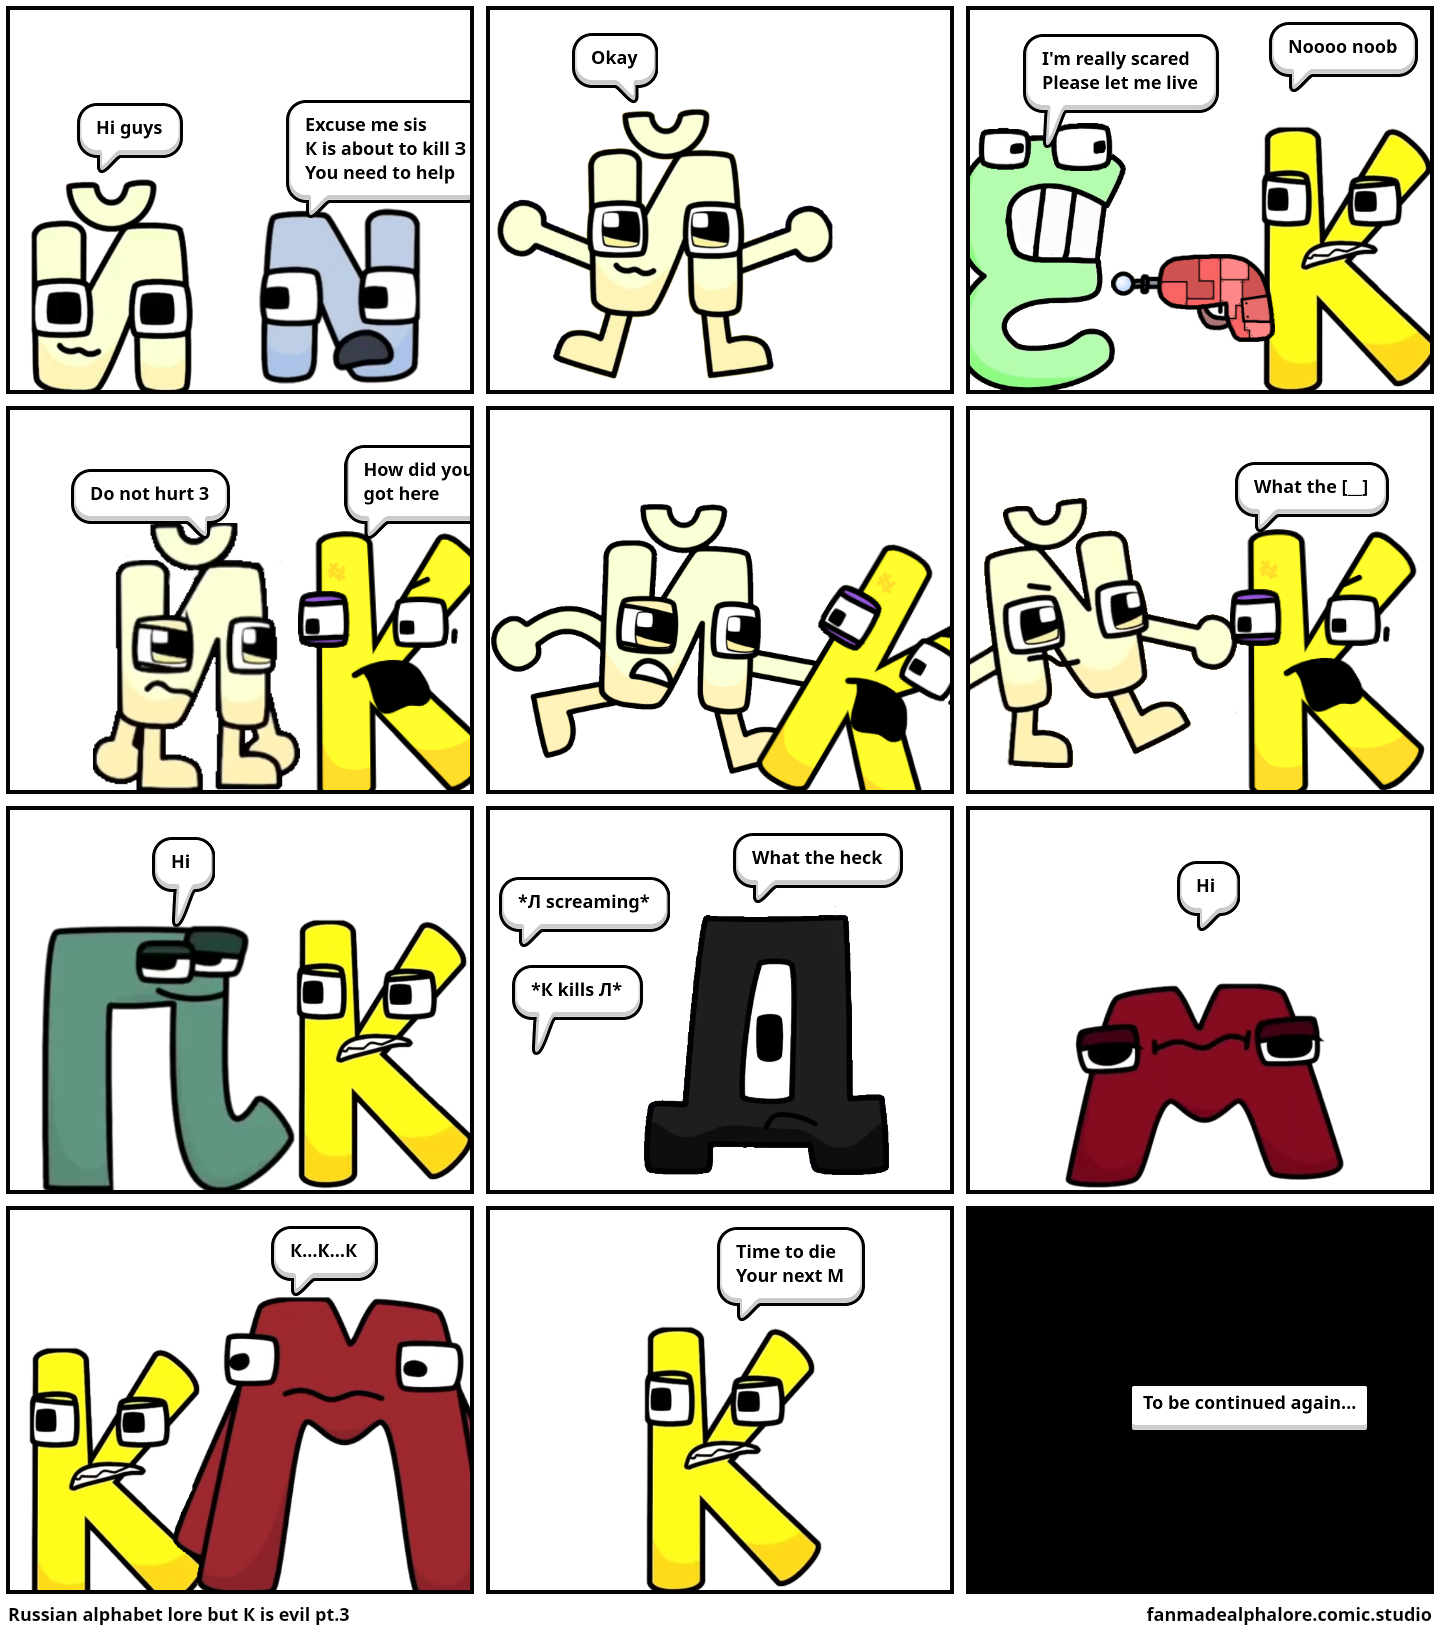 Russian alphabet lore but К is evil pt.3 - Comic Studio